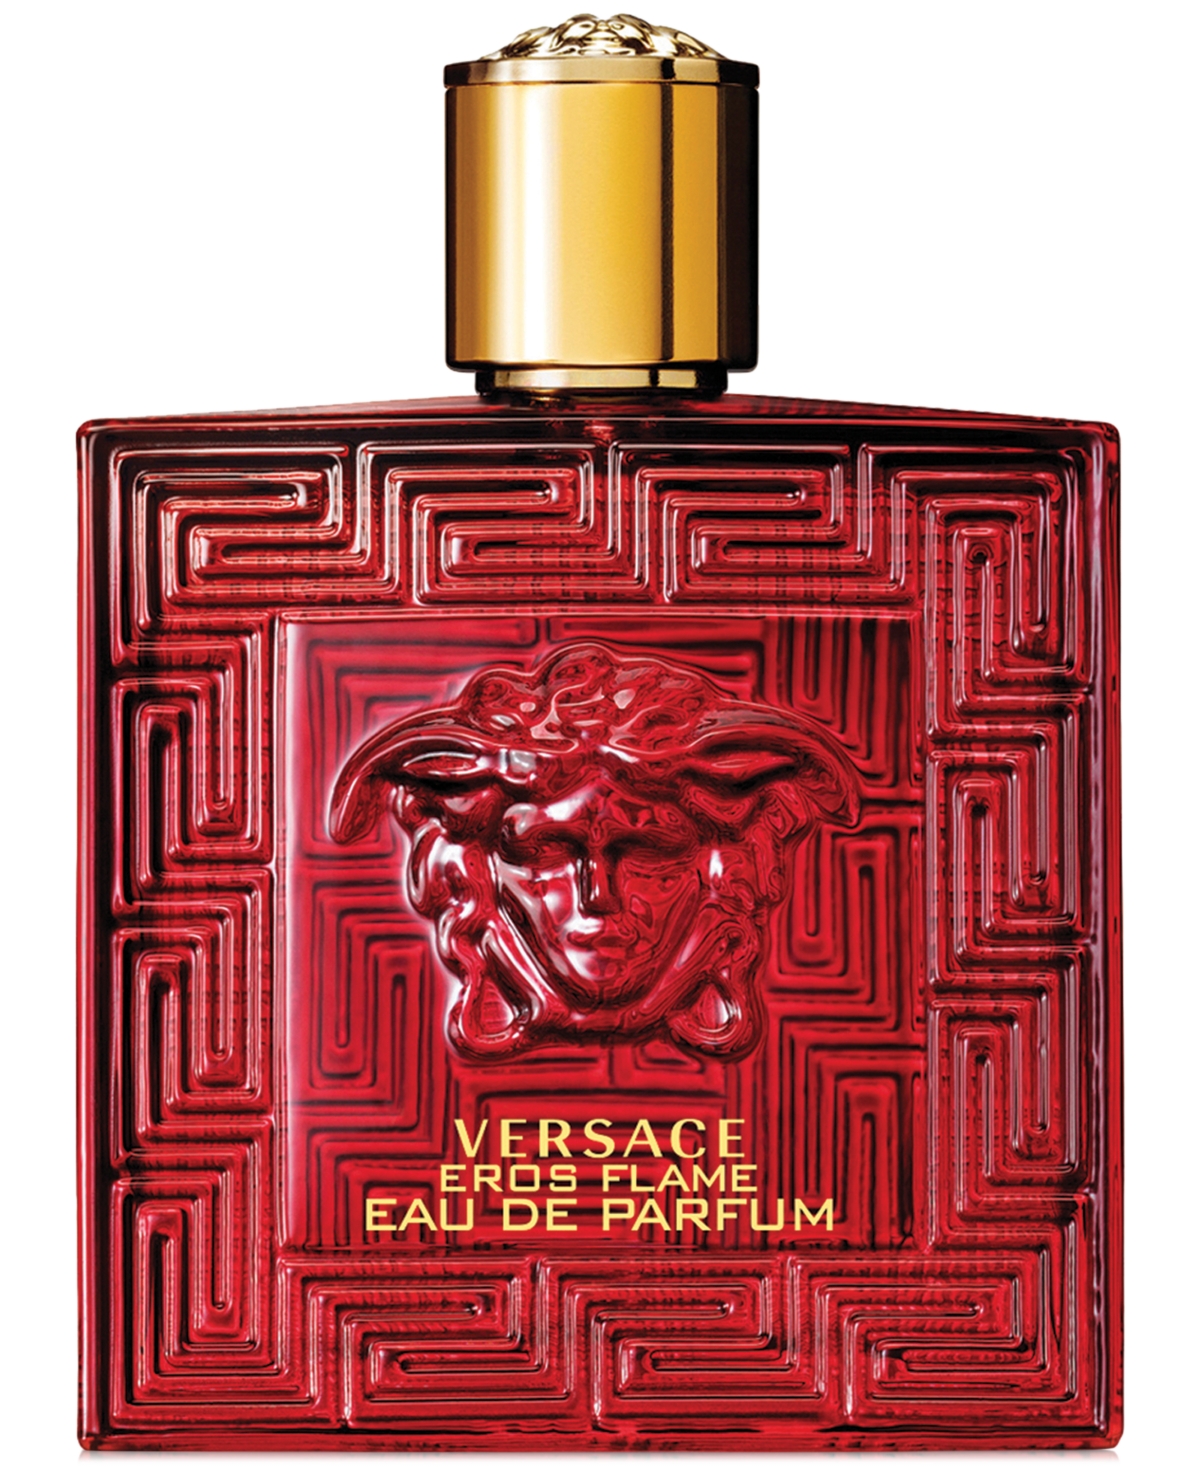 Versace Men's Eros Flame Eau de Parfum Spray, 3.4-oz.